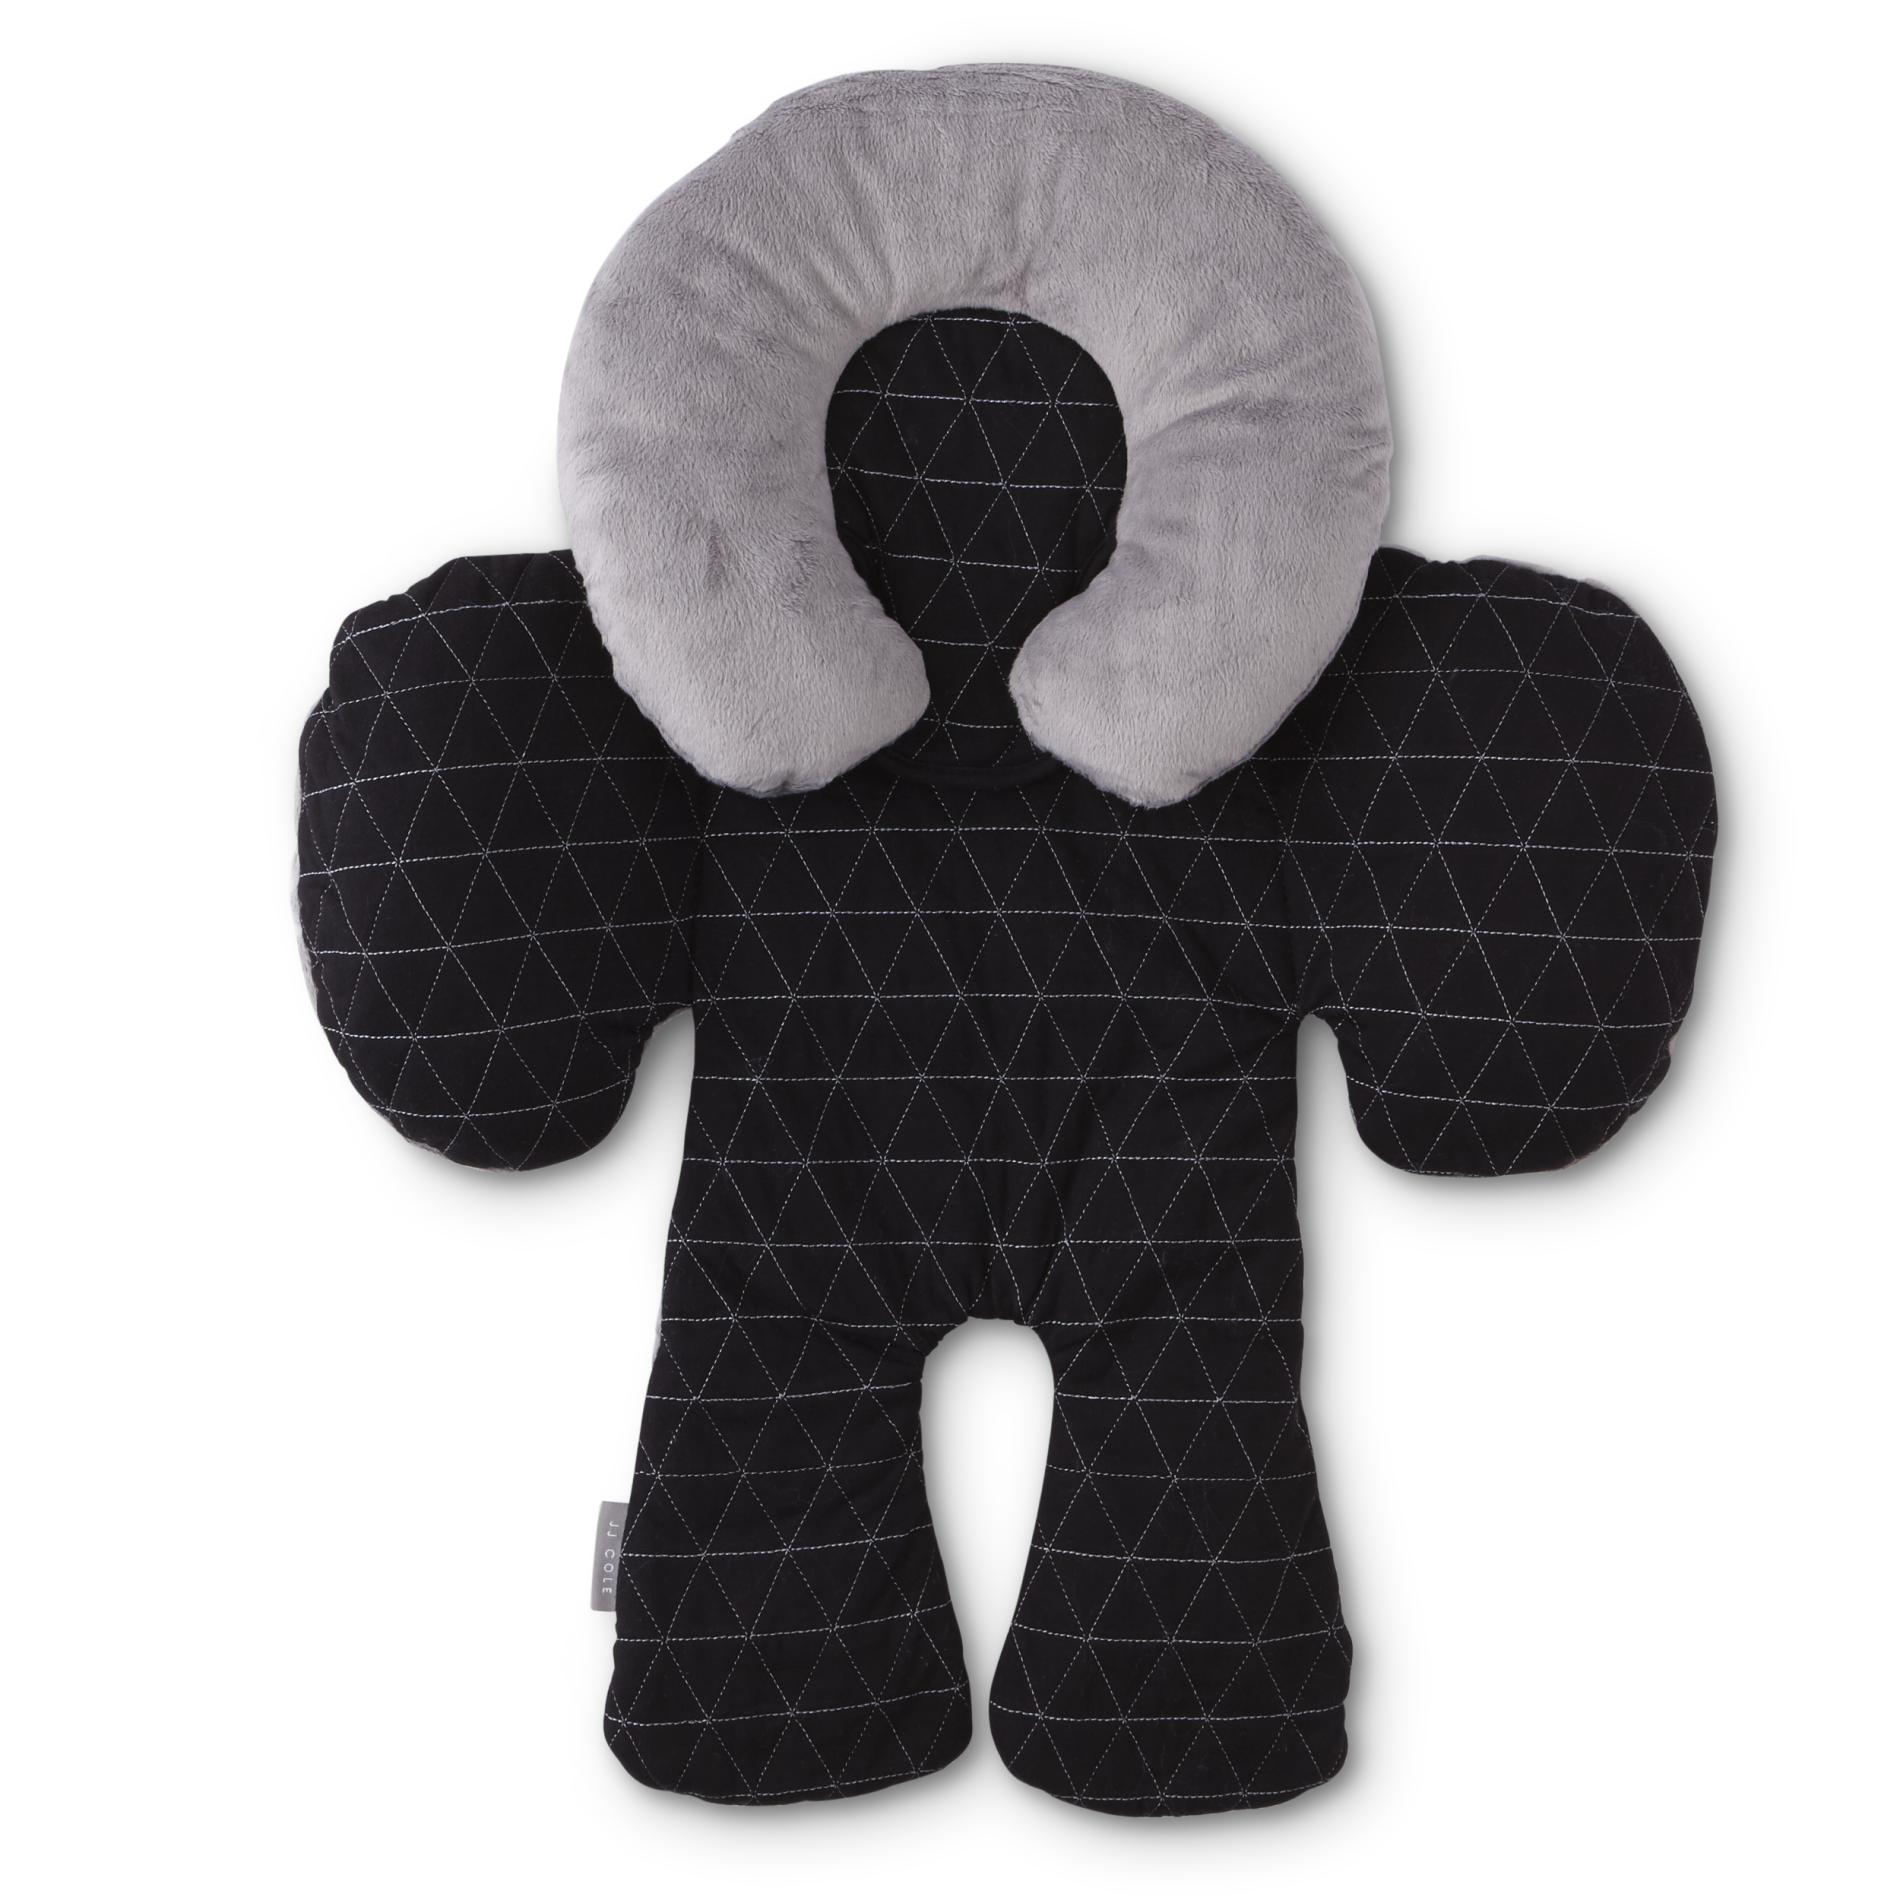 JJ Cole Infants' Body Support Travel Pillow